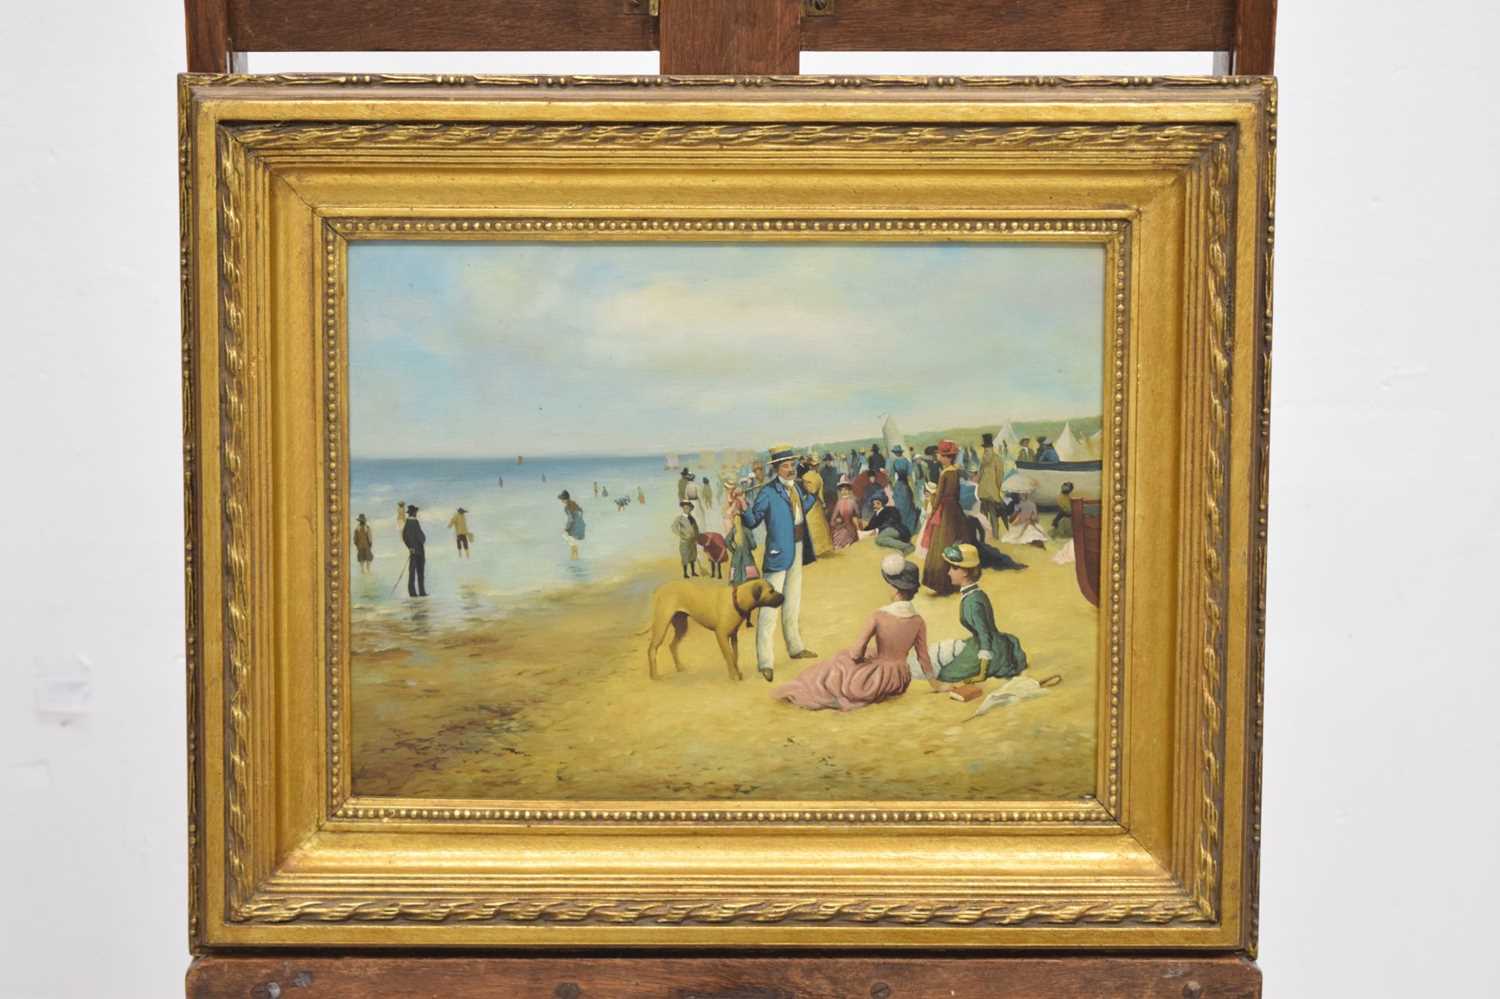 20th century Continental School - Oil on panel - Beach scene - Image 7 of 8